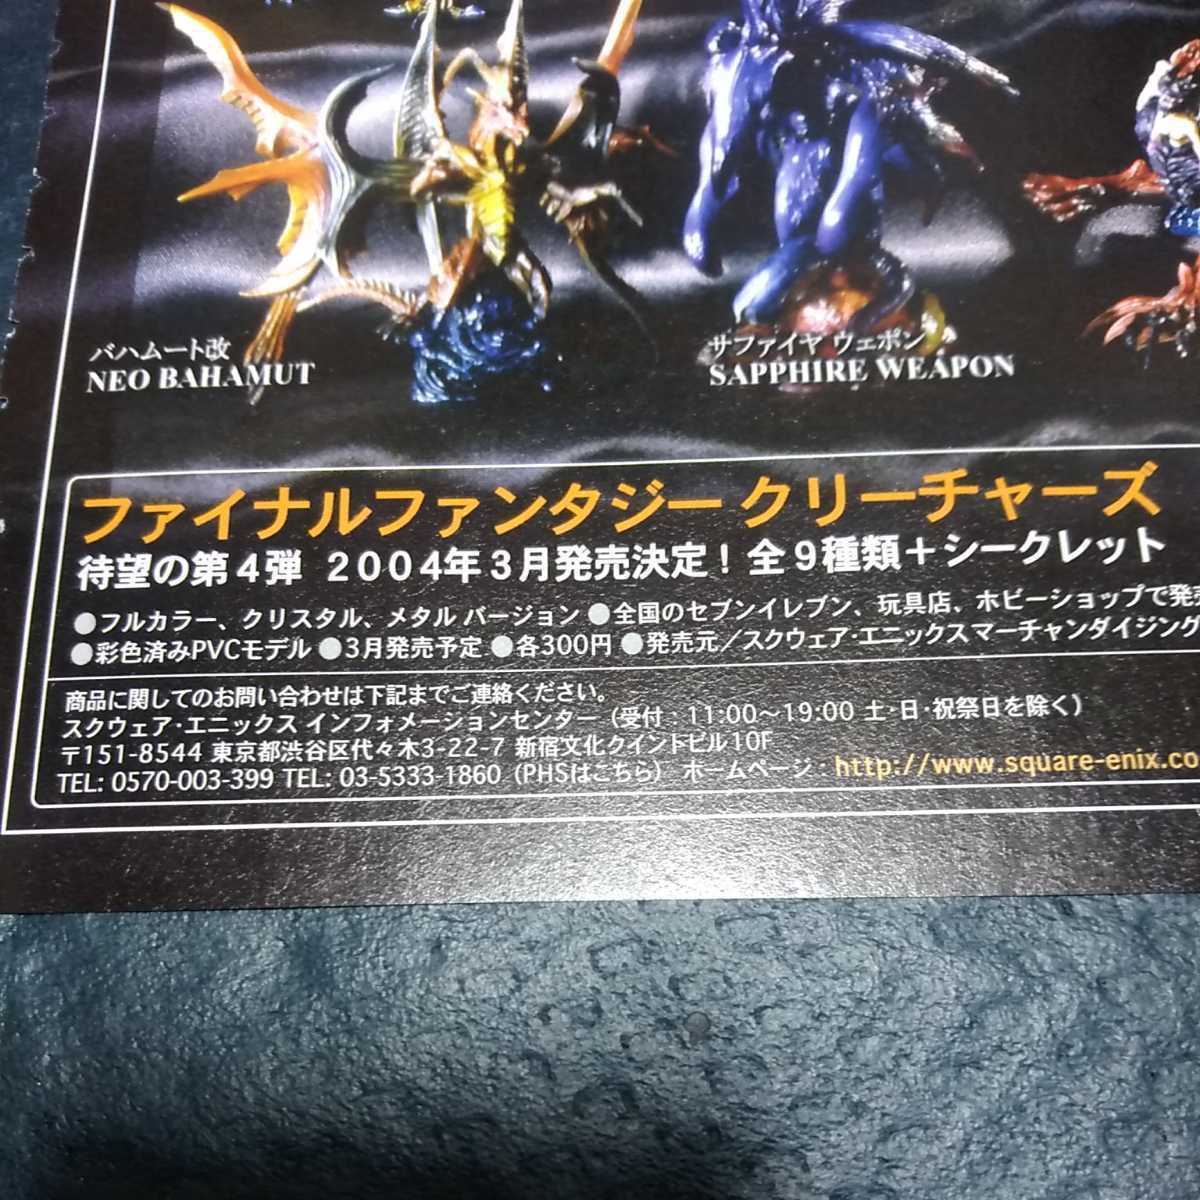  Final Fantasy Final Fantasy Creature zvol.4 публикация в журнале реклама вырезки 